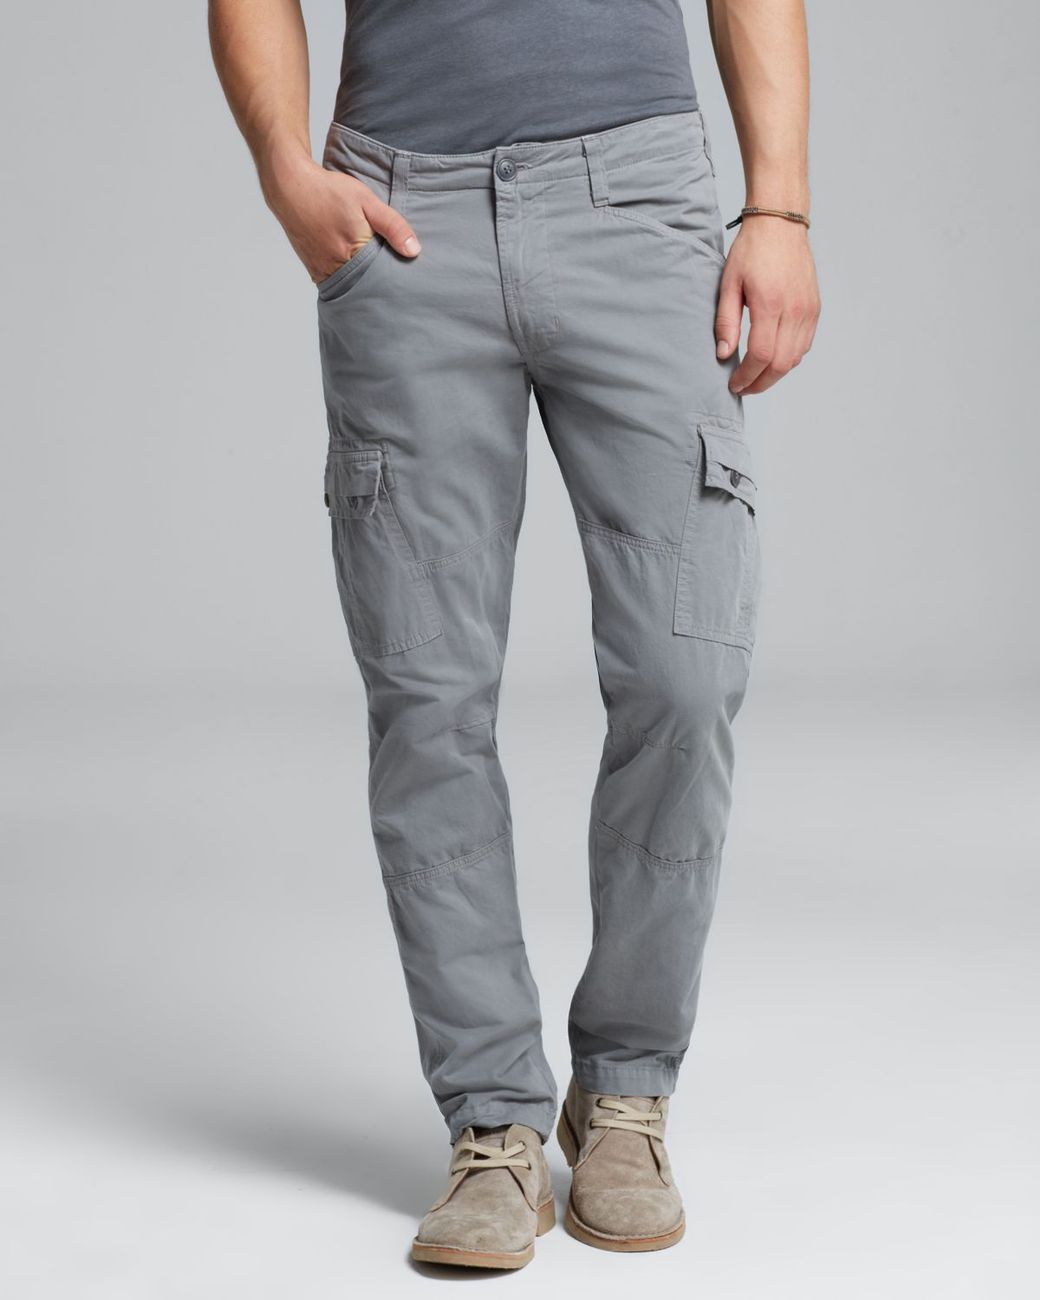 Details more than 73 grey cargo pants mens best - in.eteachers